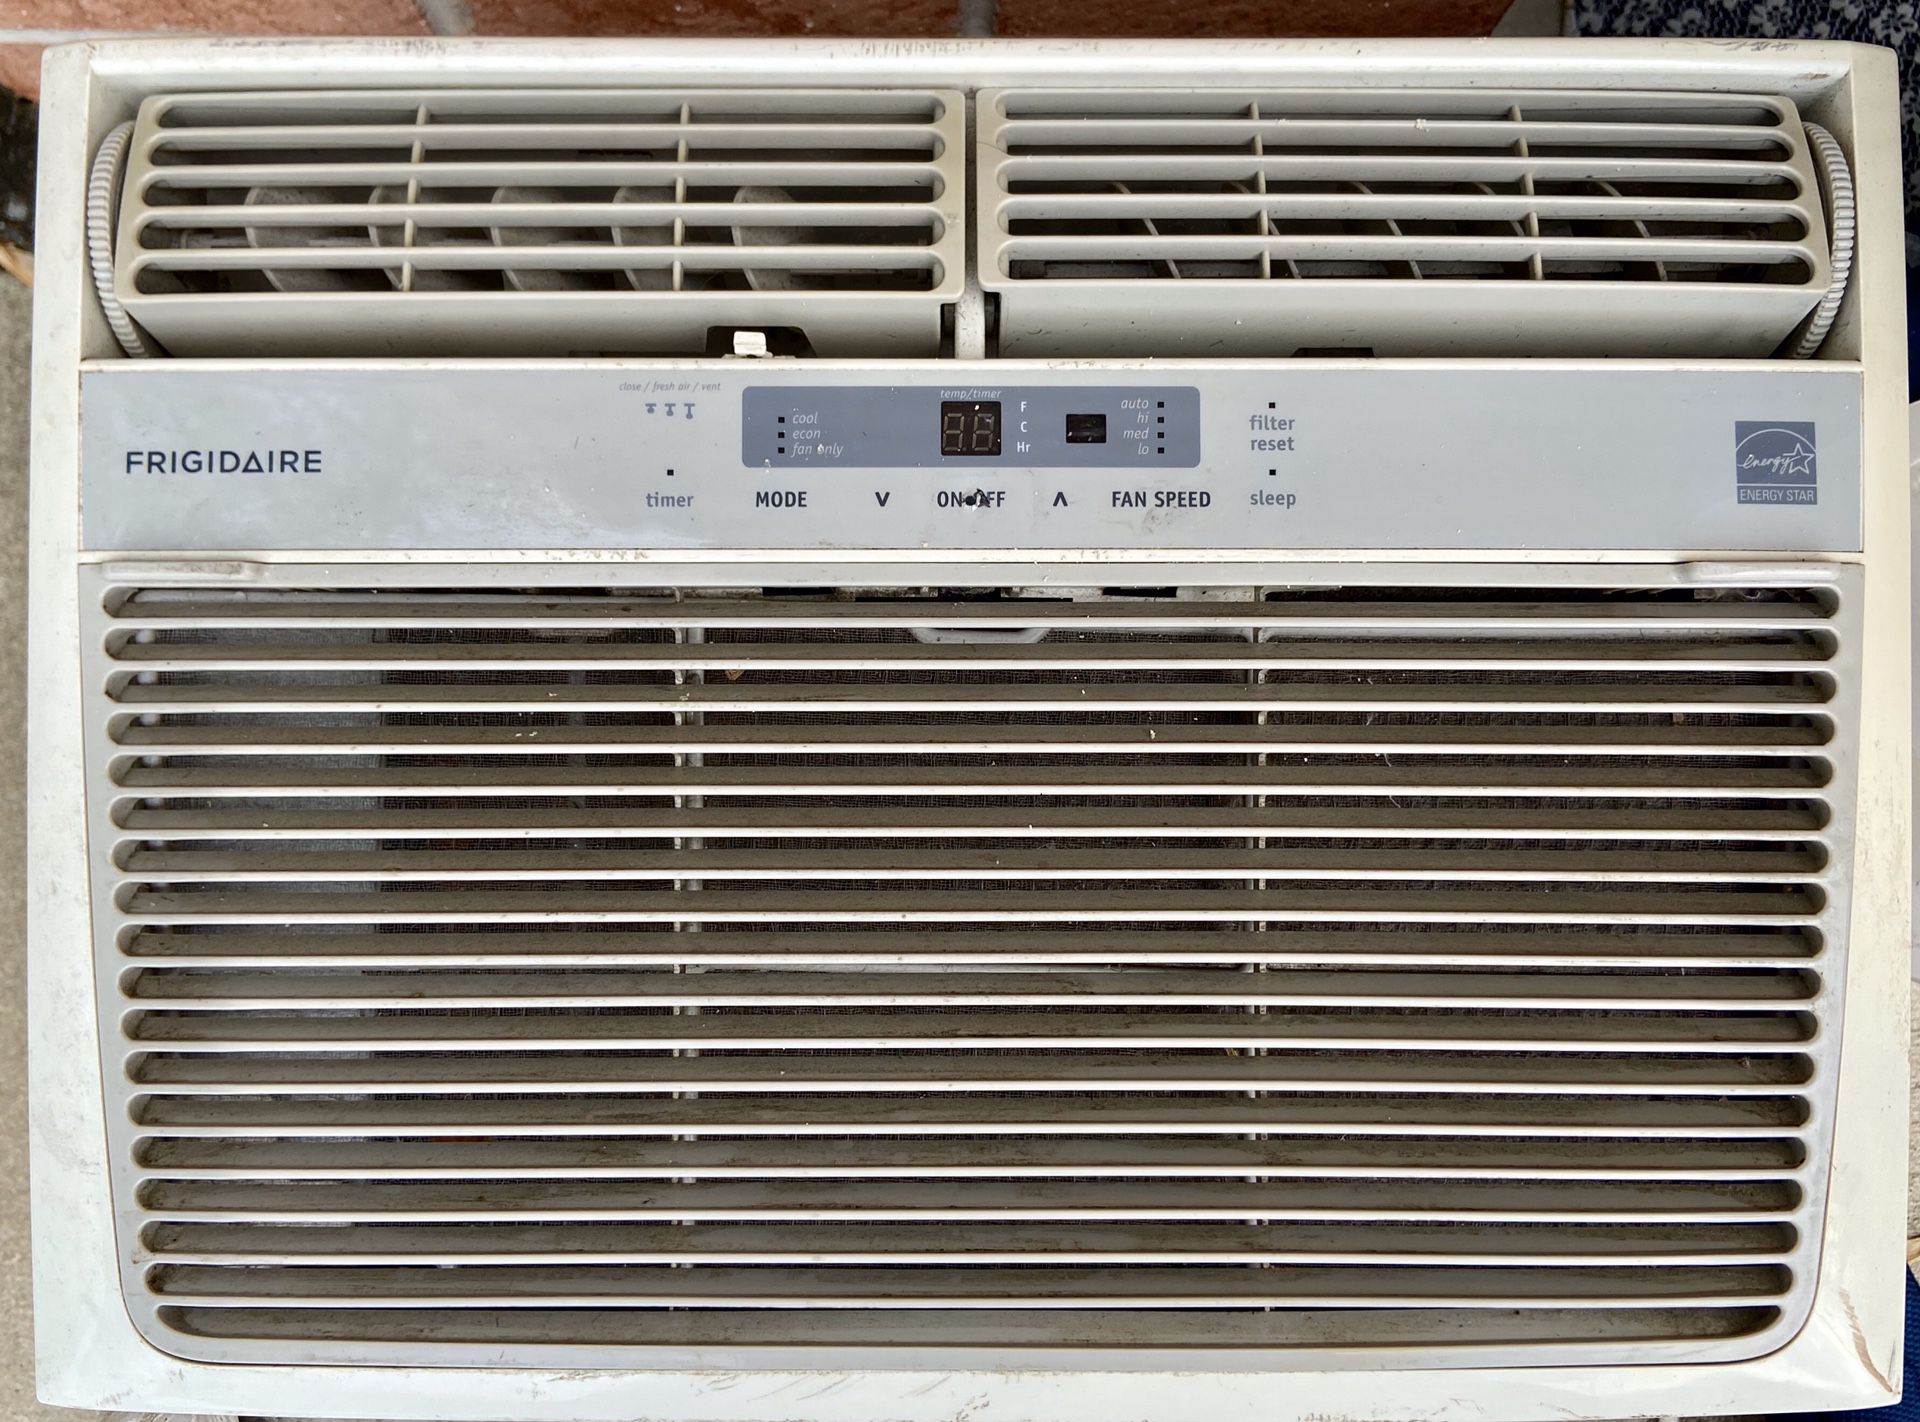 12,000 BTU window air conditioner